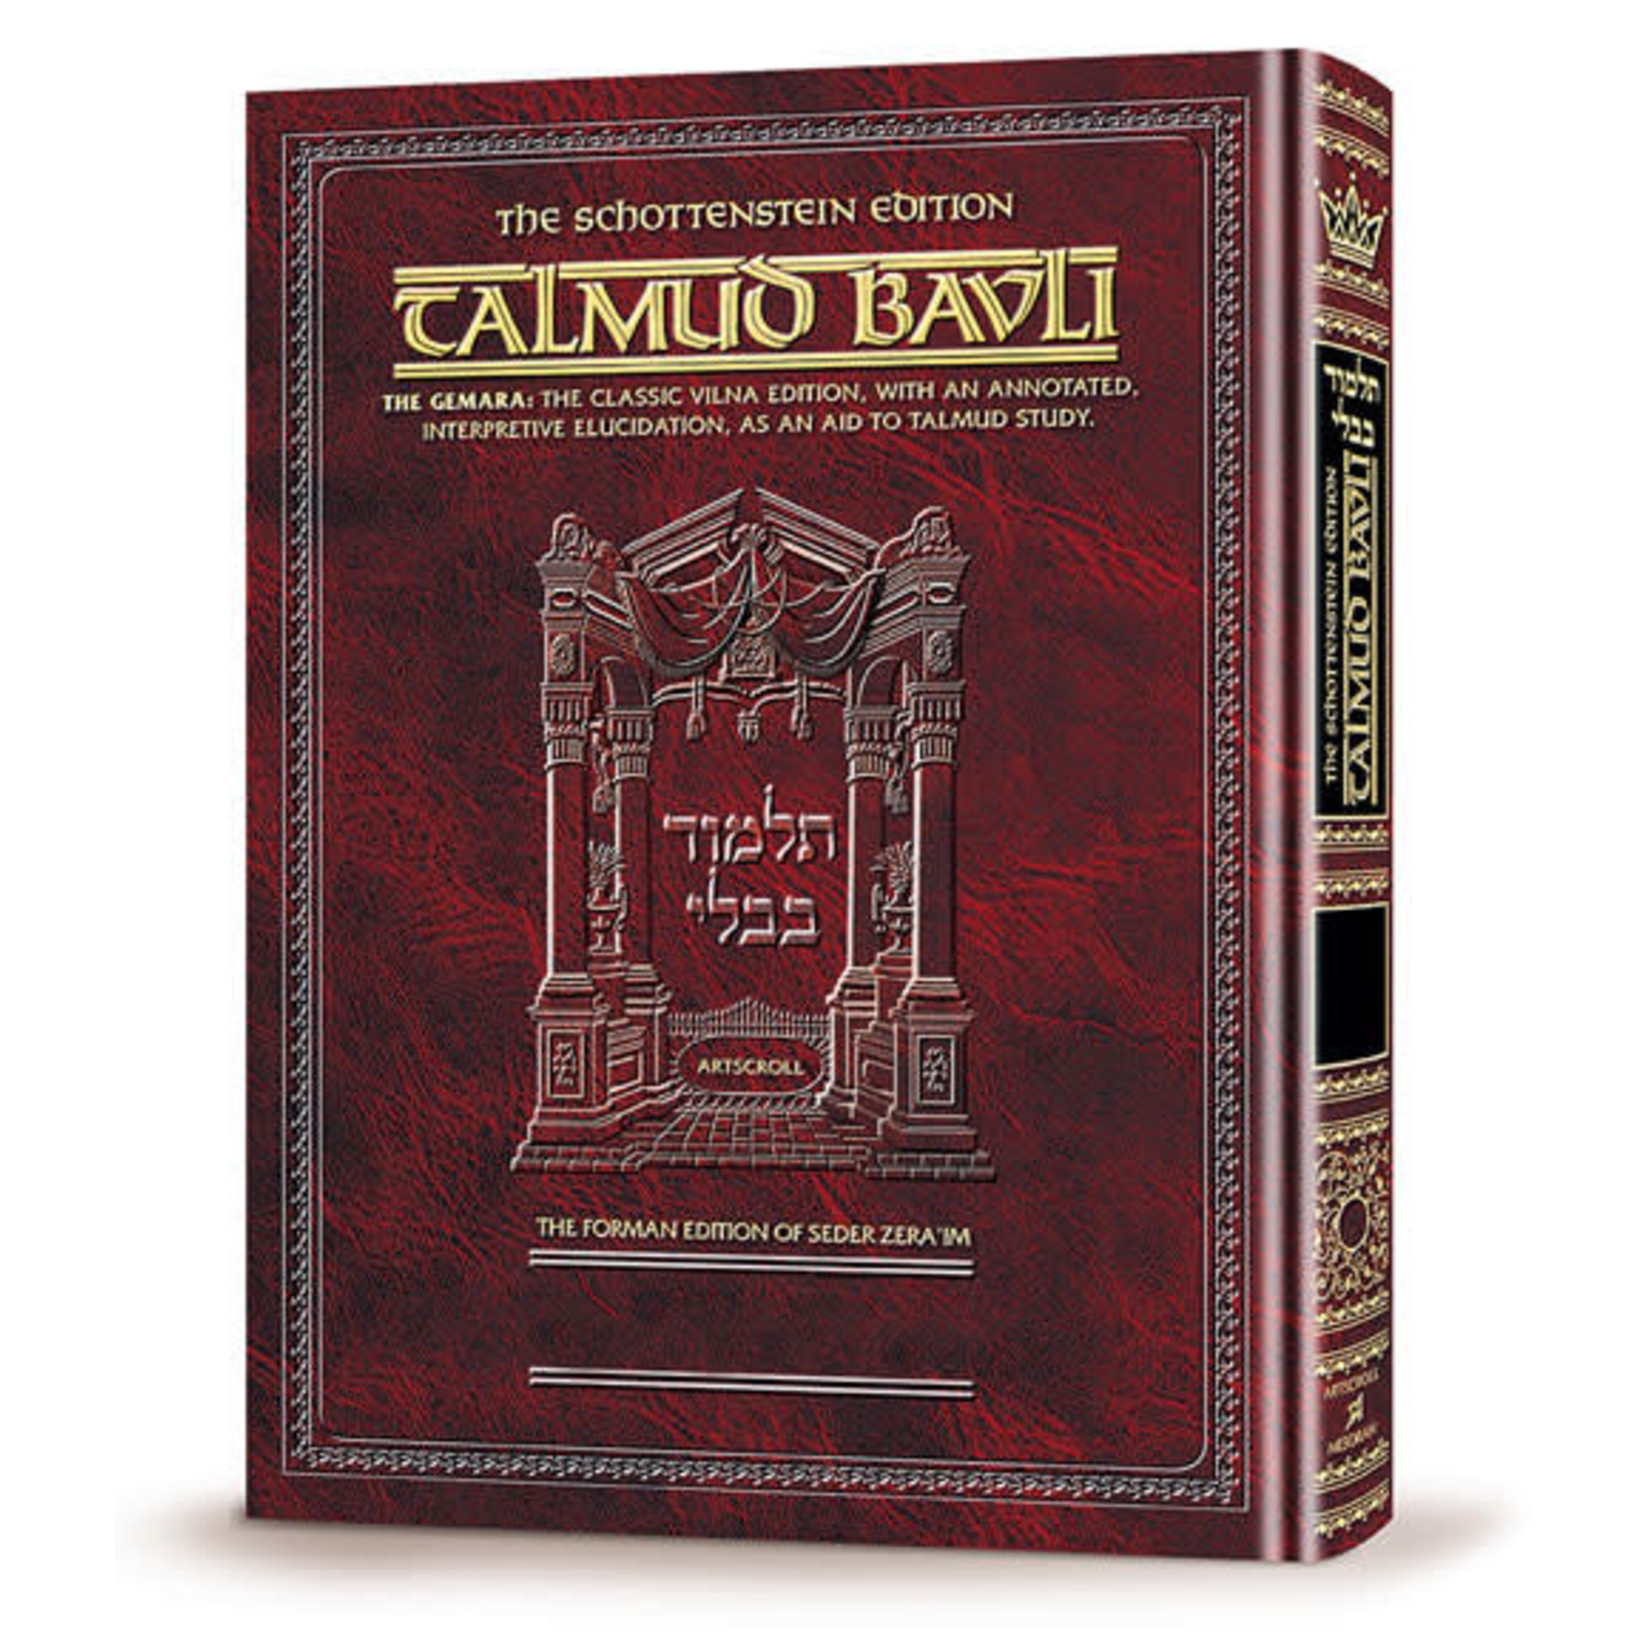 MEILAH/KINNIM/TAMID/MIDDOS - ArtScroll Schottenstein Hebrew/English Talmud Bavli, Full Size